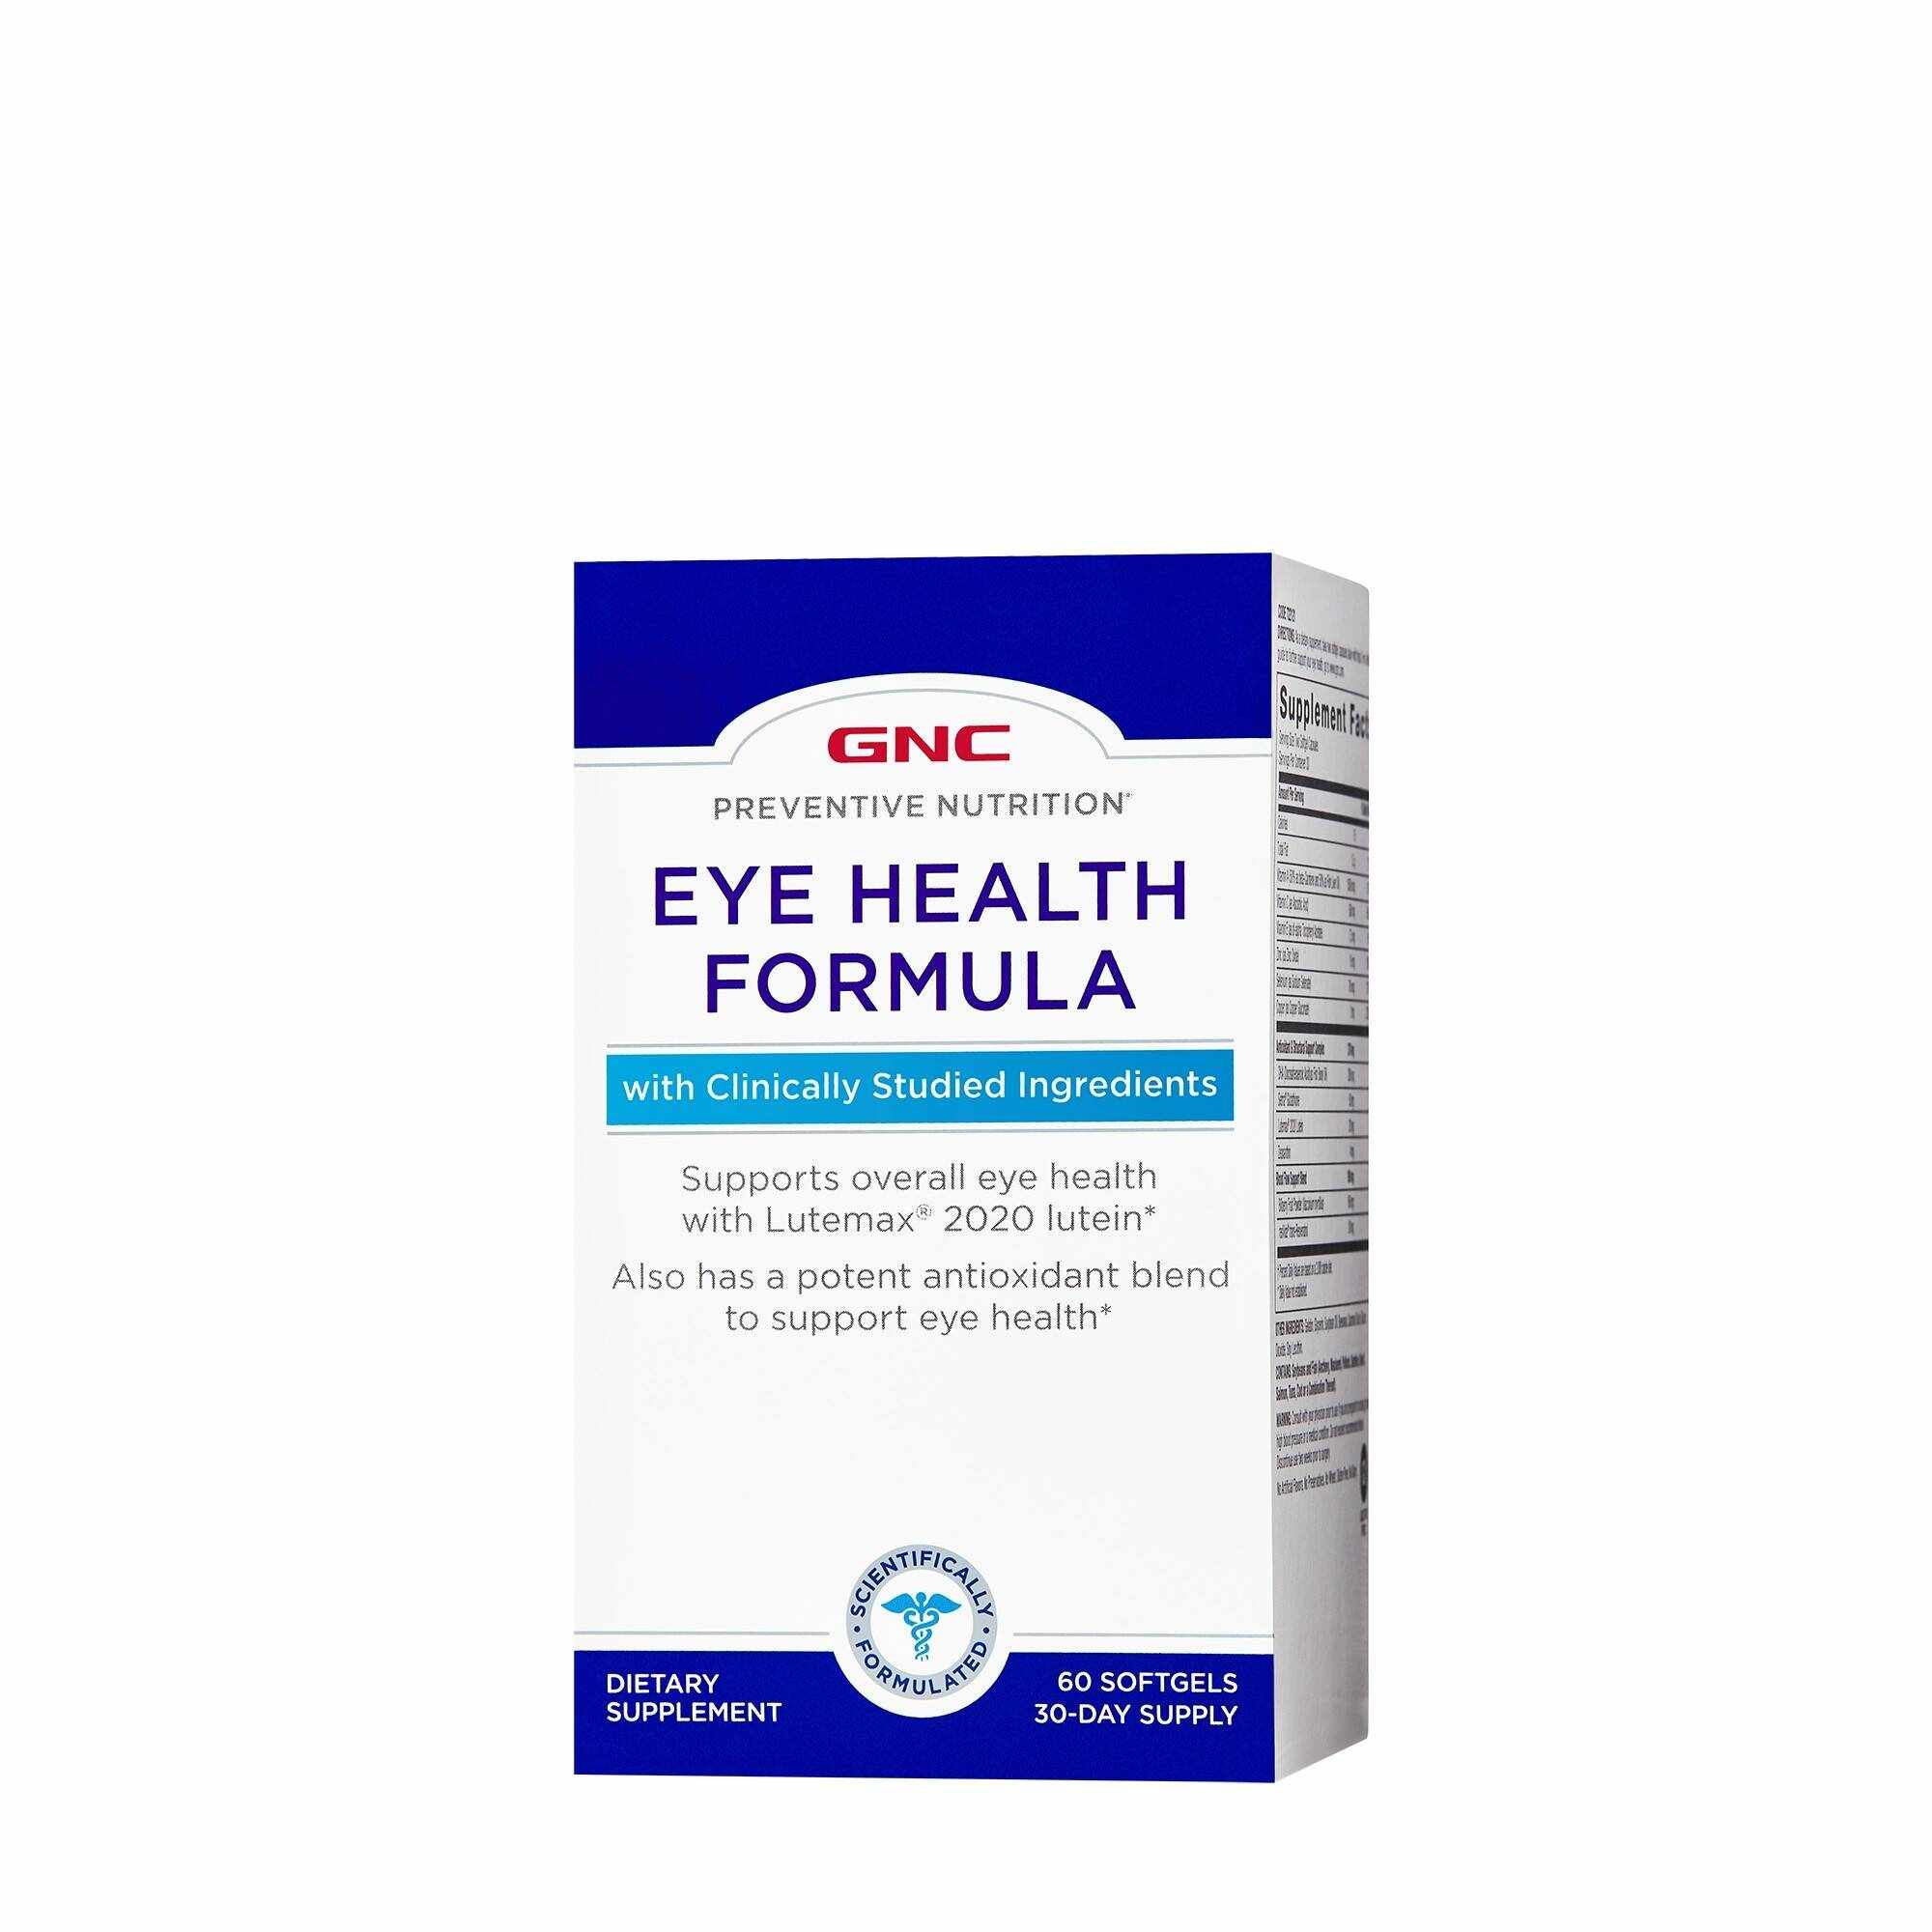 Preventive Nutrition Eye Health, Formula Pentru Sanatatea Ochilor, 60cps - Gnc